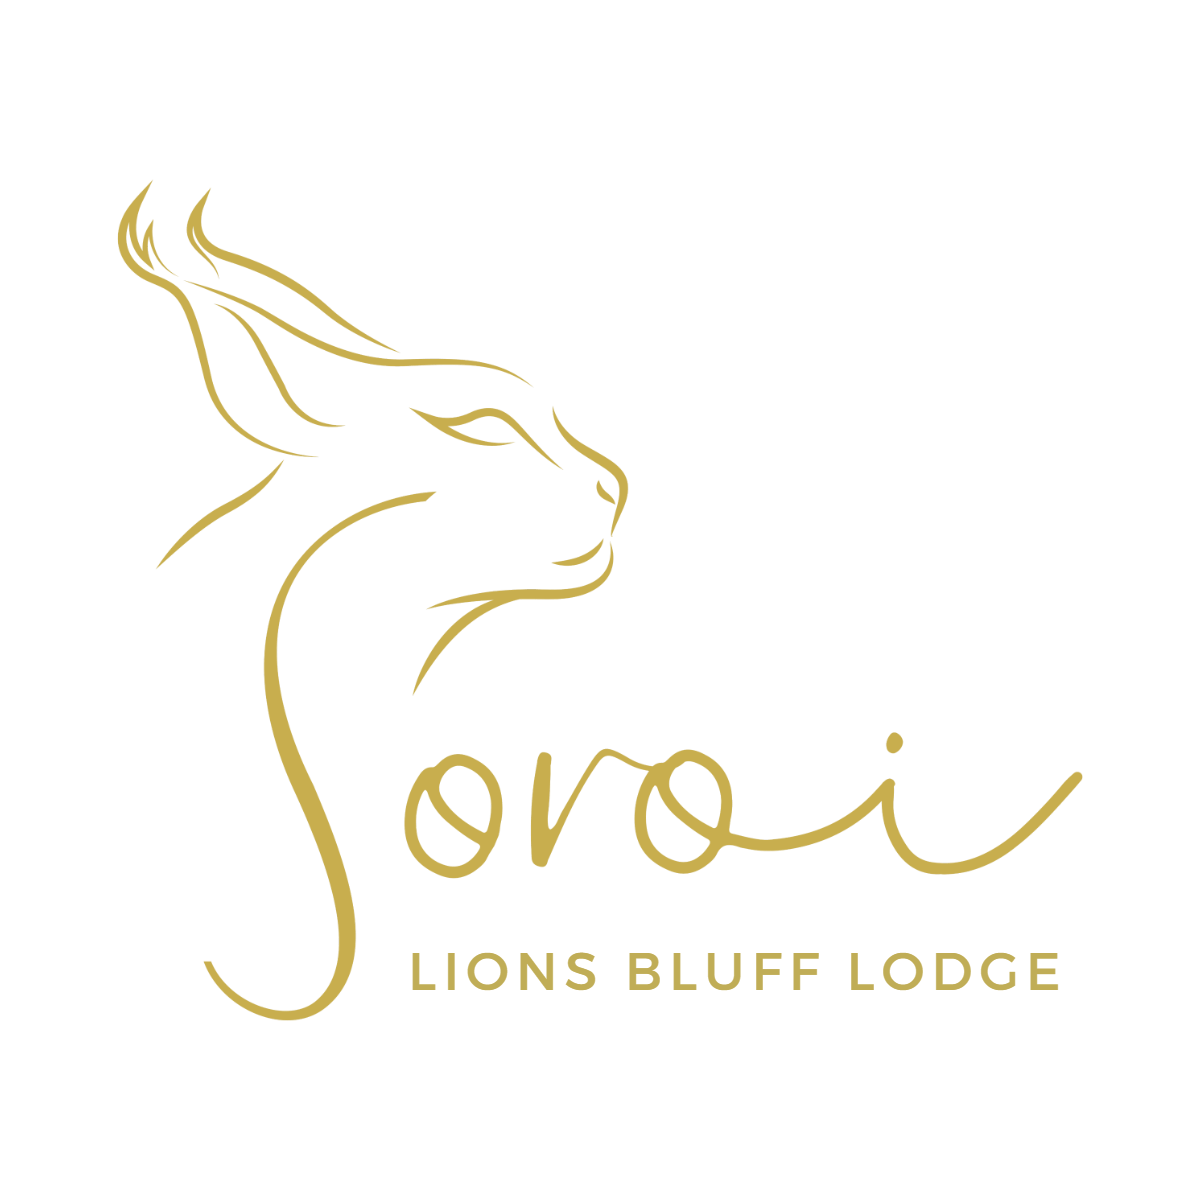 Soroi Lions Bluff Lodge Logo